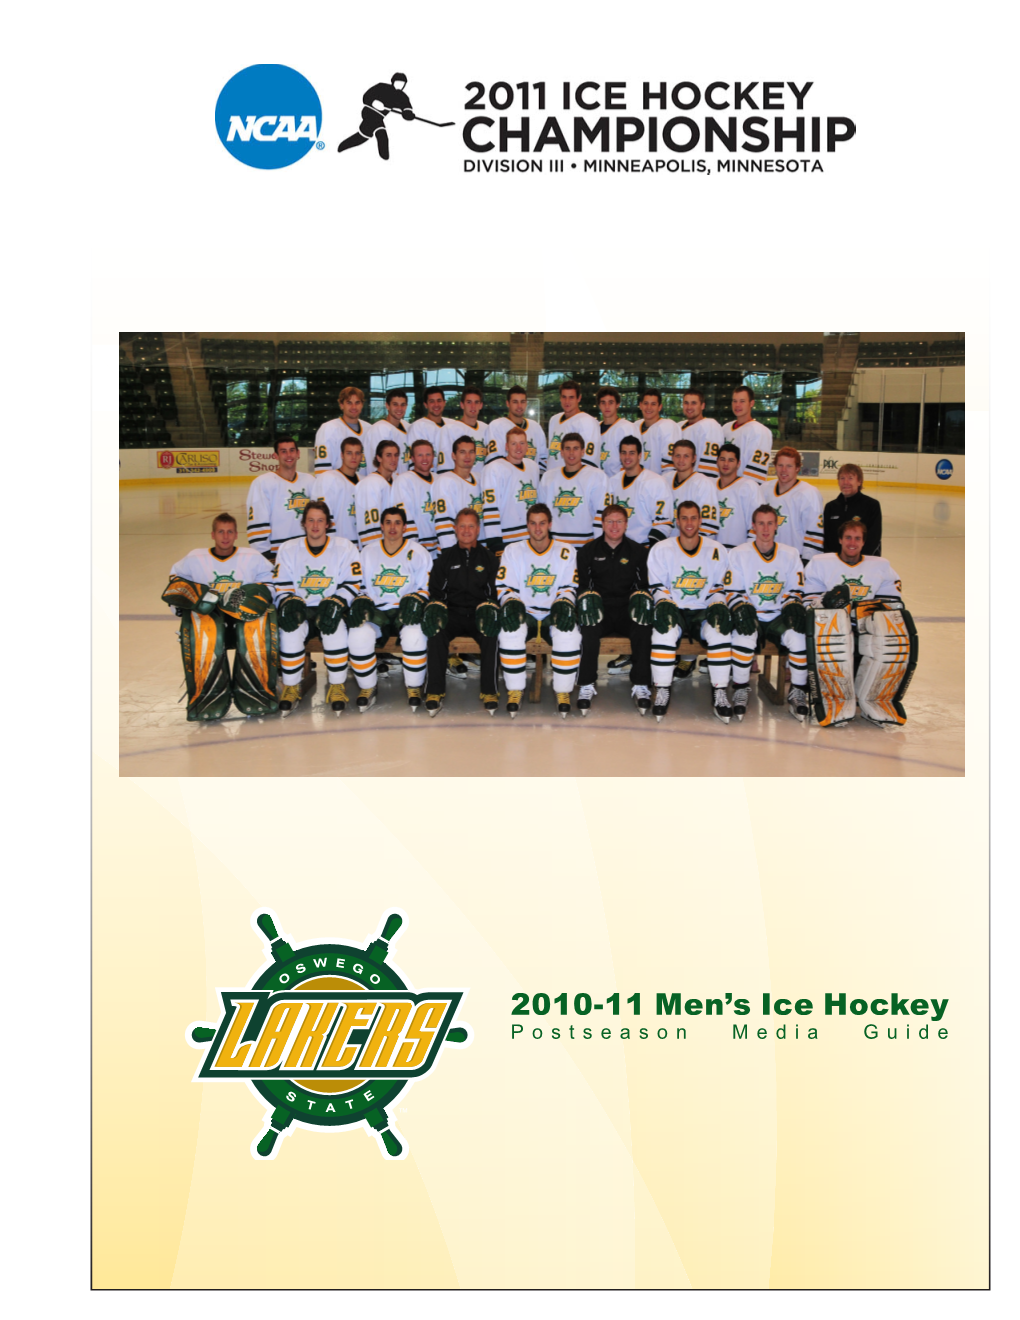 2010-11 Men's Ice Hockey